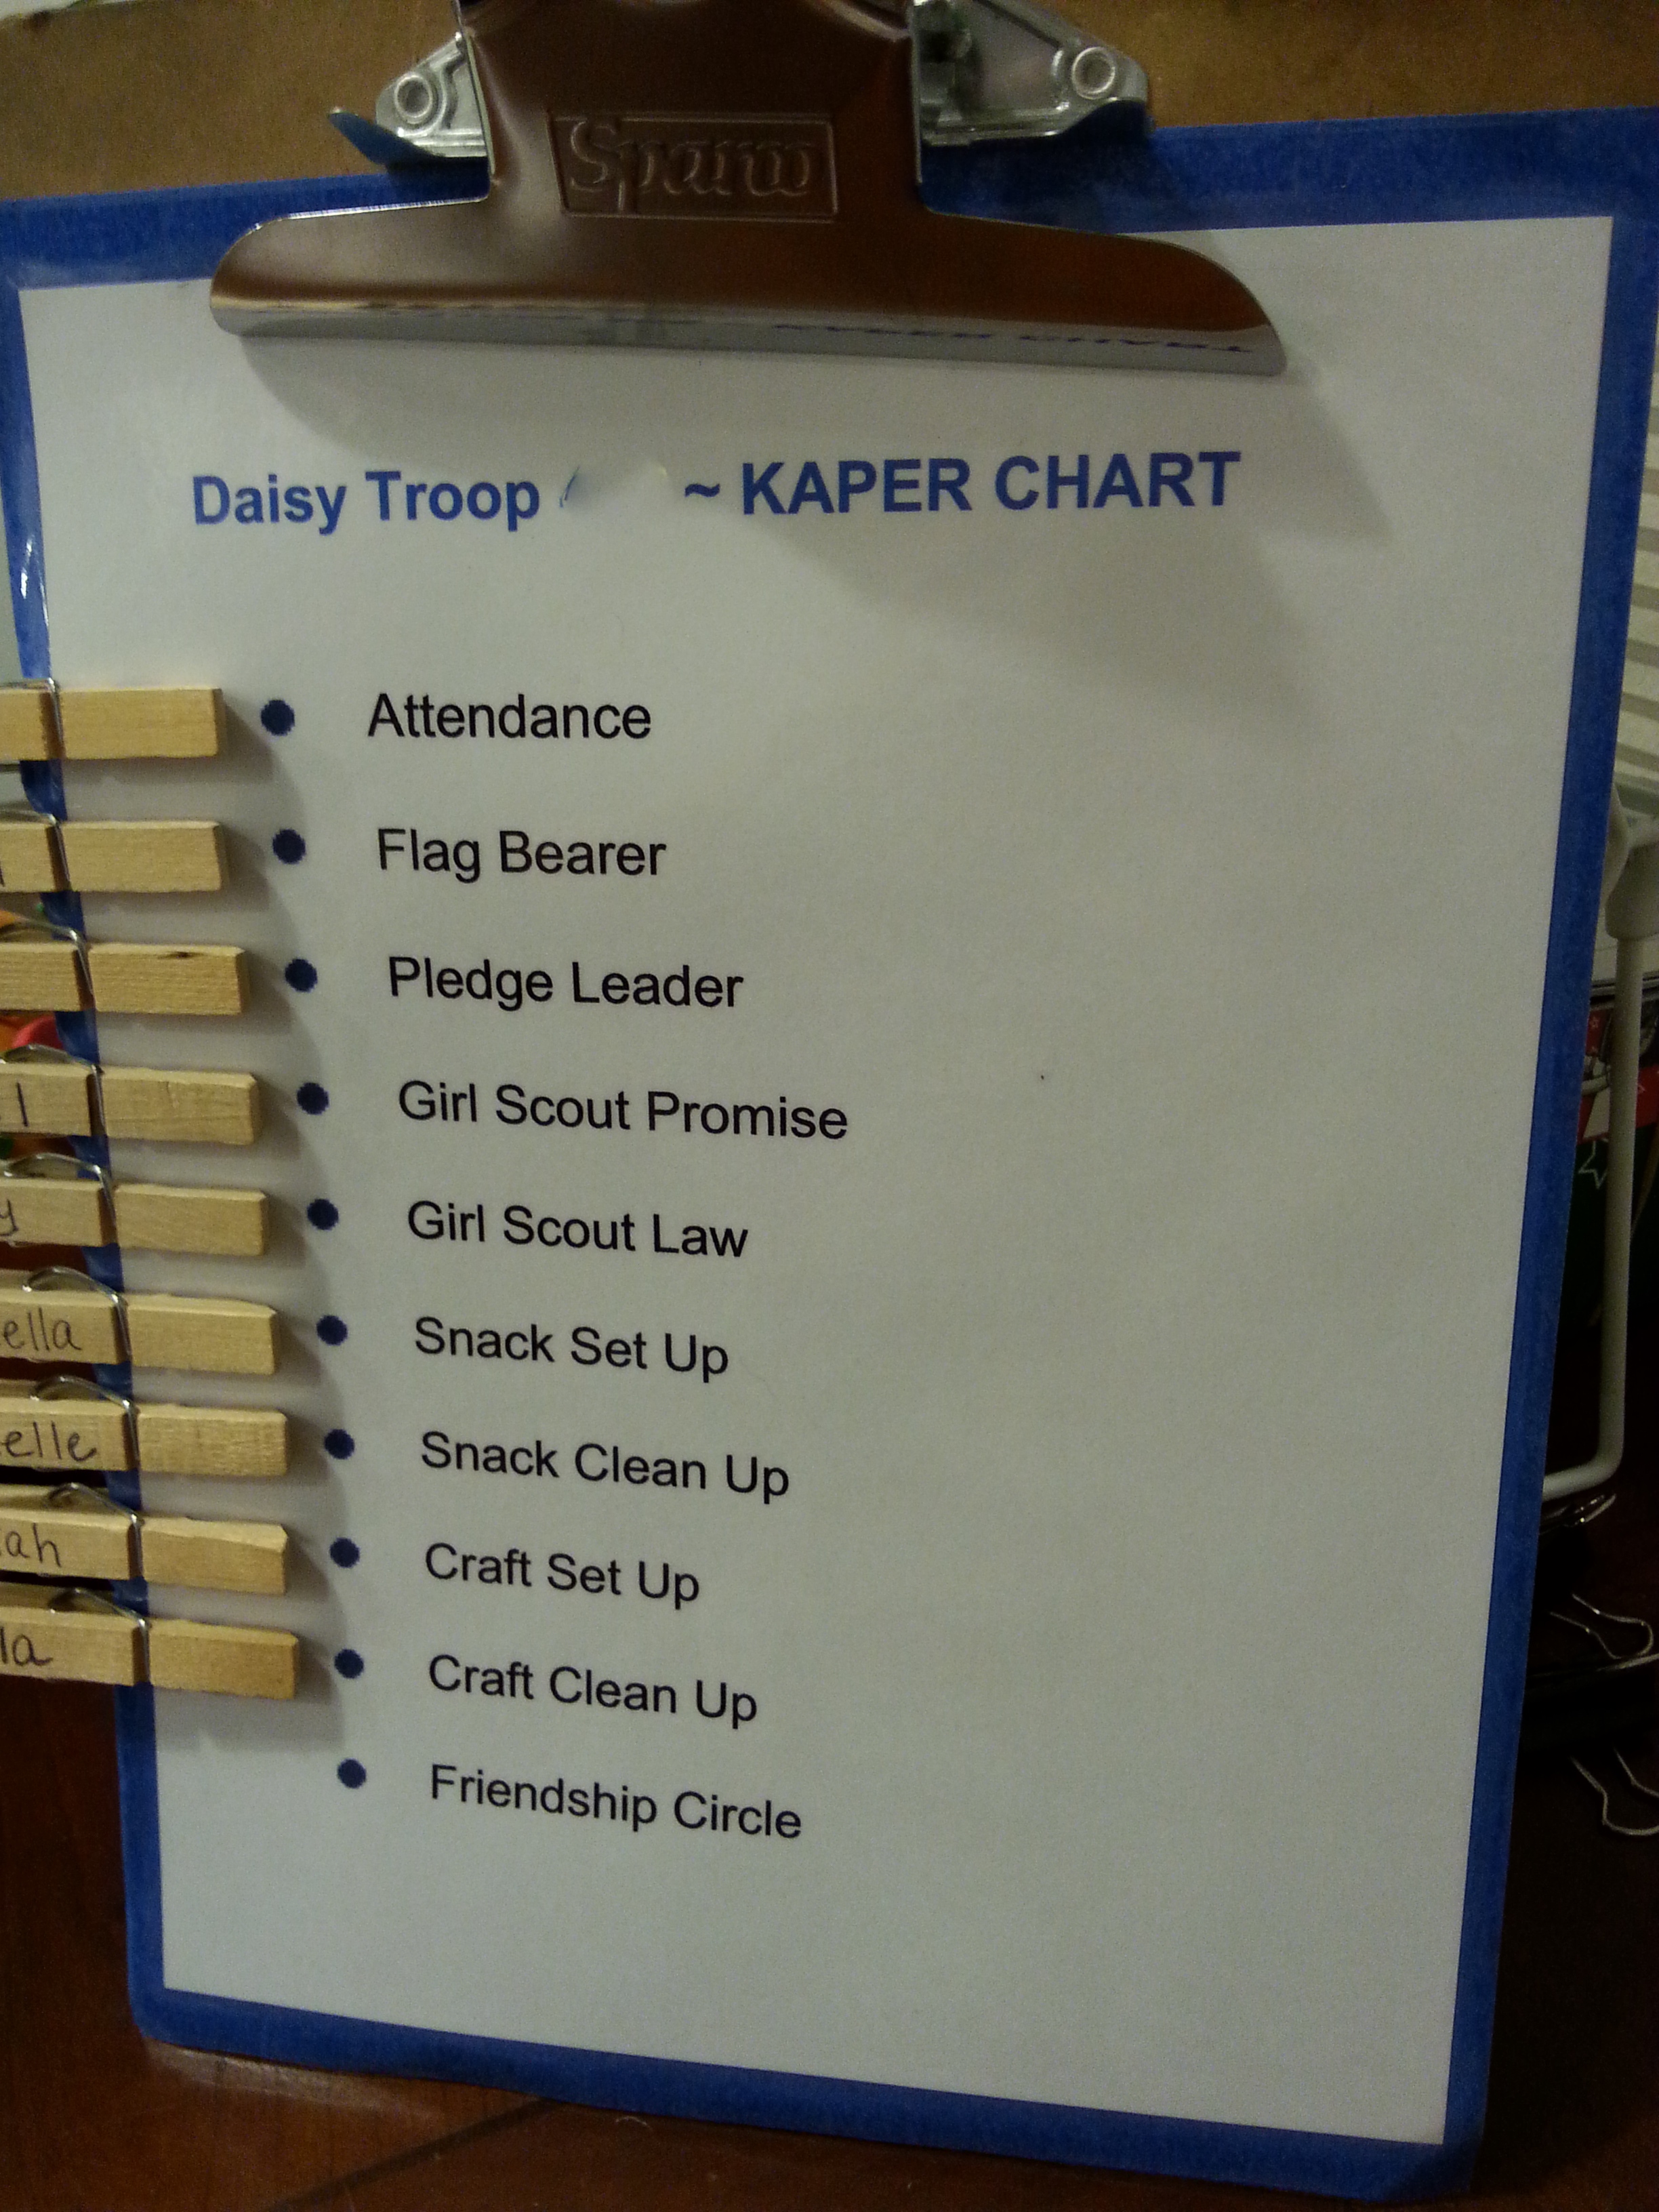 Kaper Chart